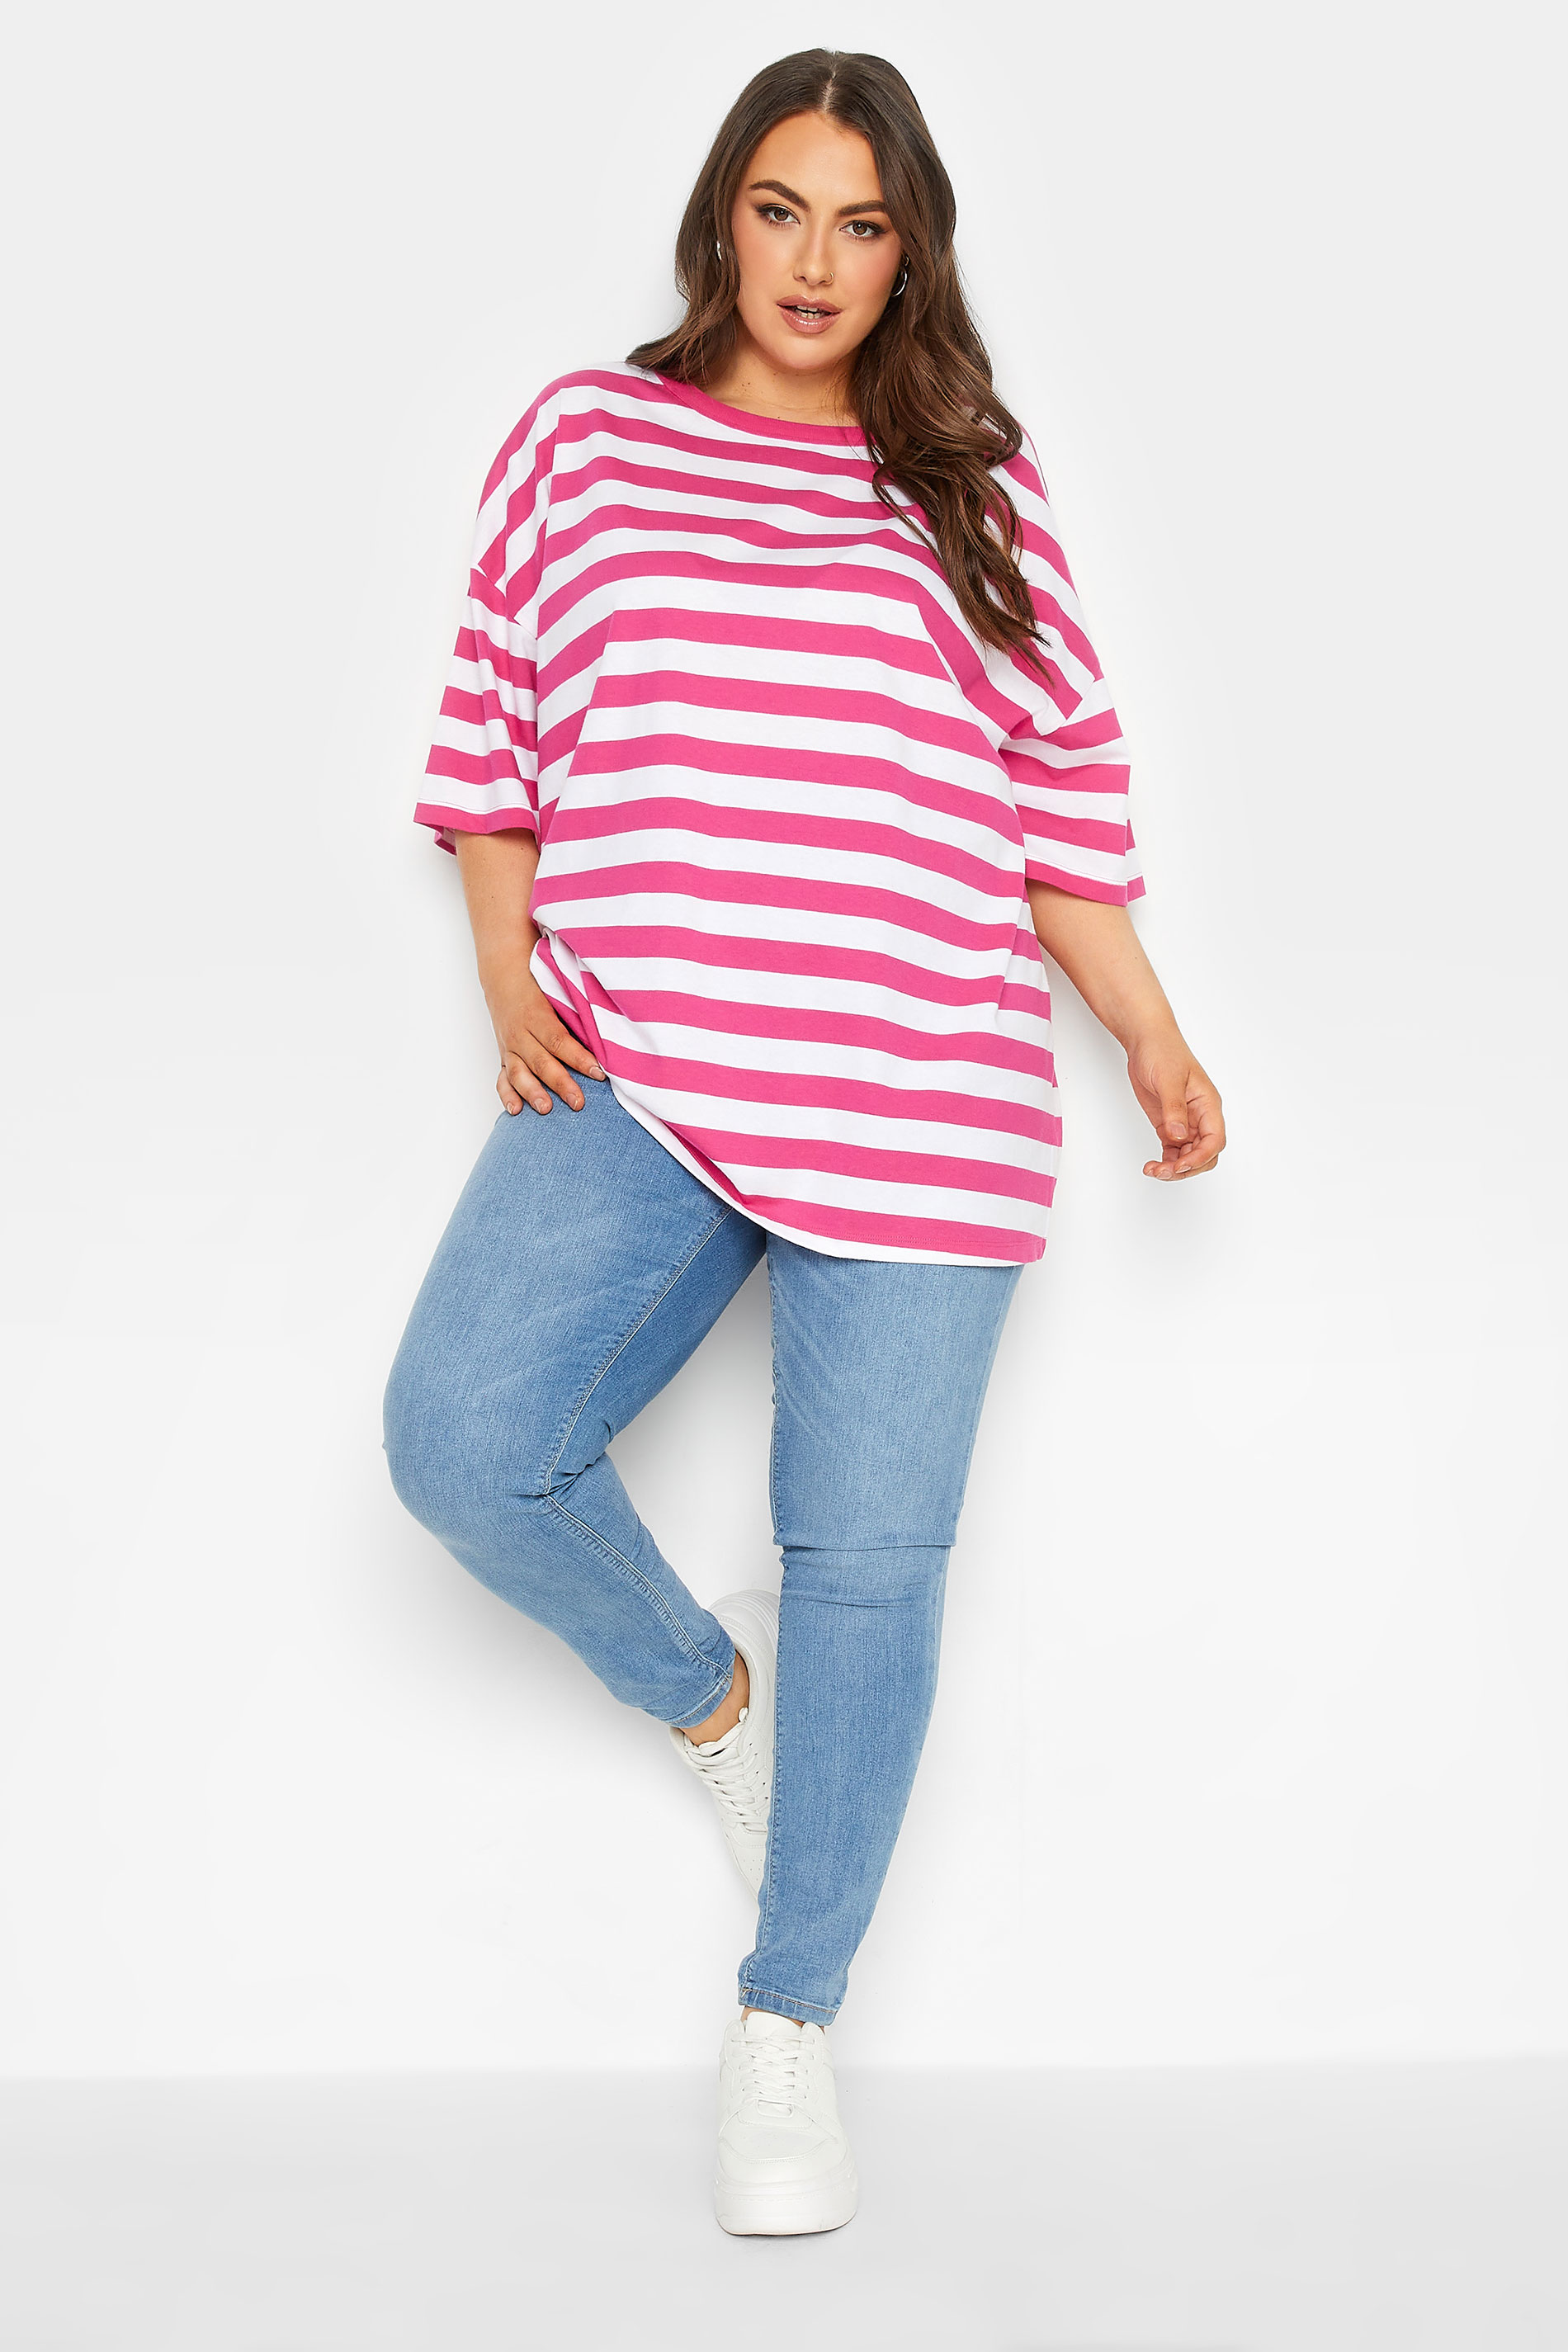 YOURS Plus Size Pink & White Stripe Oversized Boxy T-Shirt | Yours Clothing 3